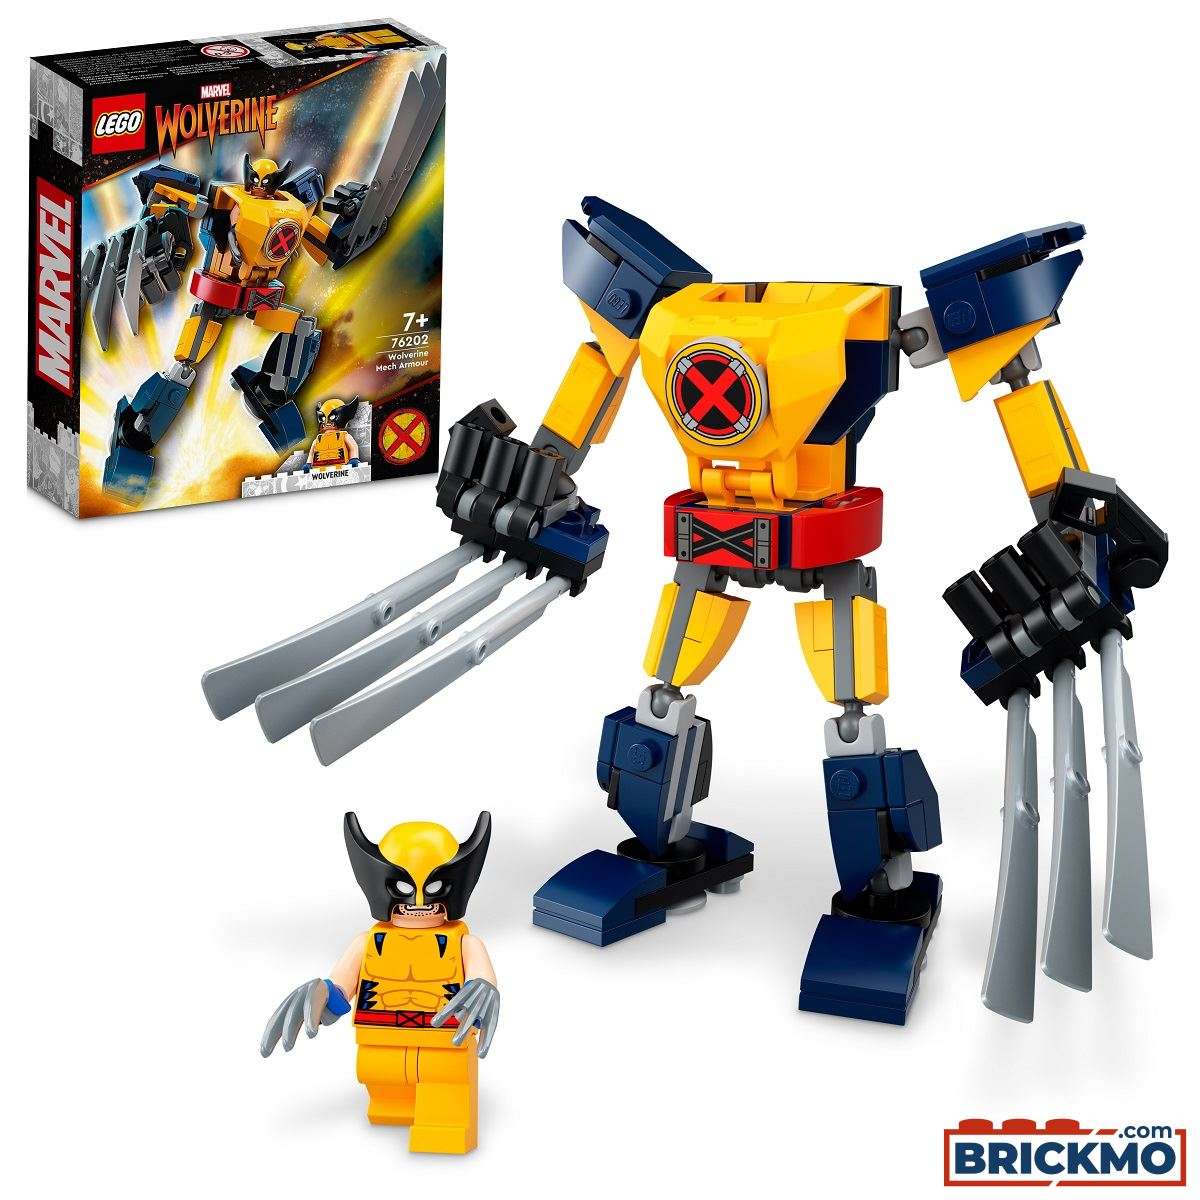 LEGO Marvel Super Heroes Wolverine Mech 76202